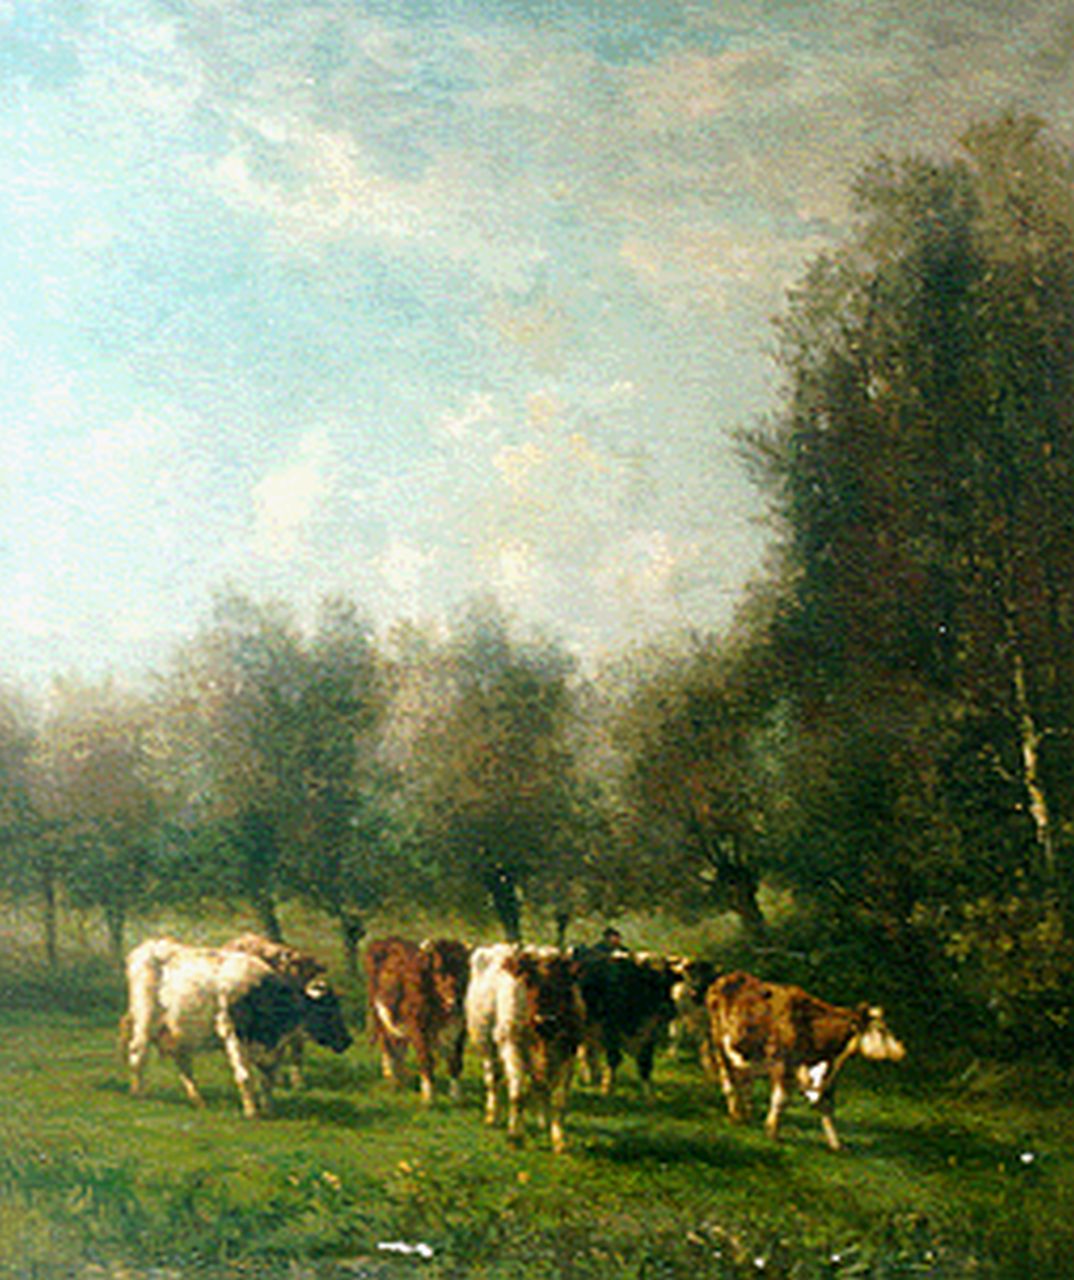 Vrolijk J.M.  | Johannes Martinus 'Jan' Vrolijk, Cows in a meadow, oil on canvas 120.0 x 100.2 cm, signed l.l.